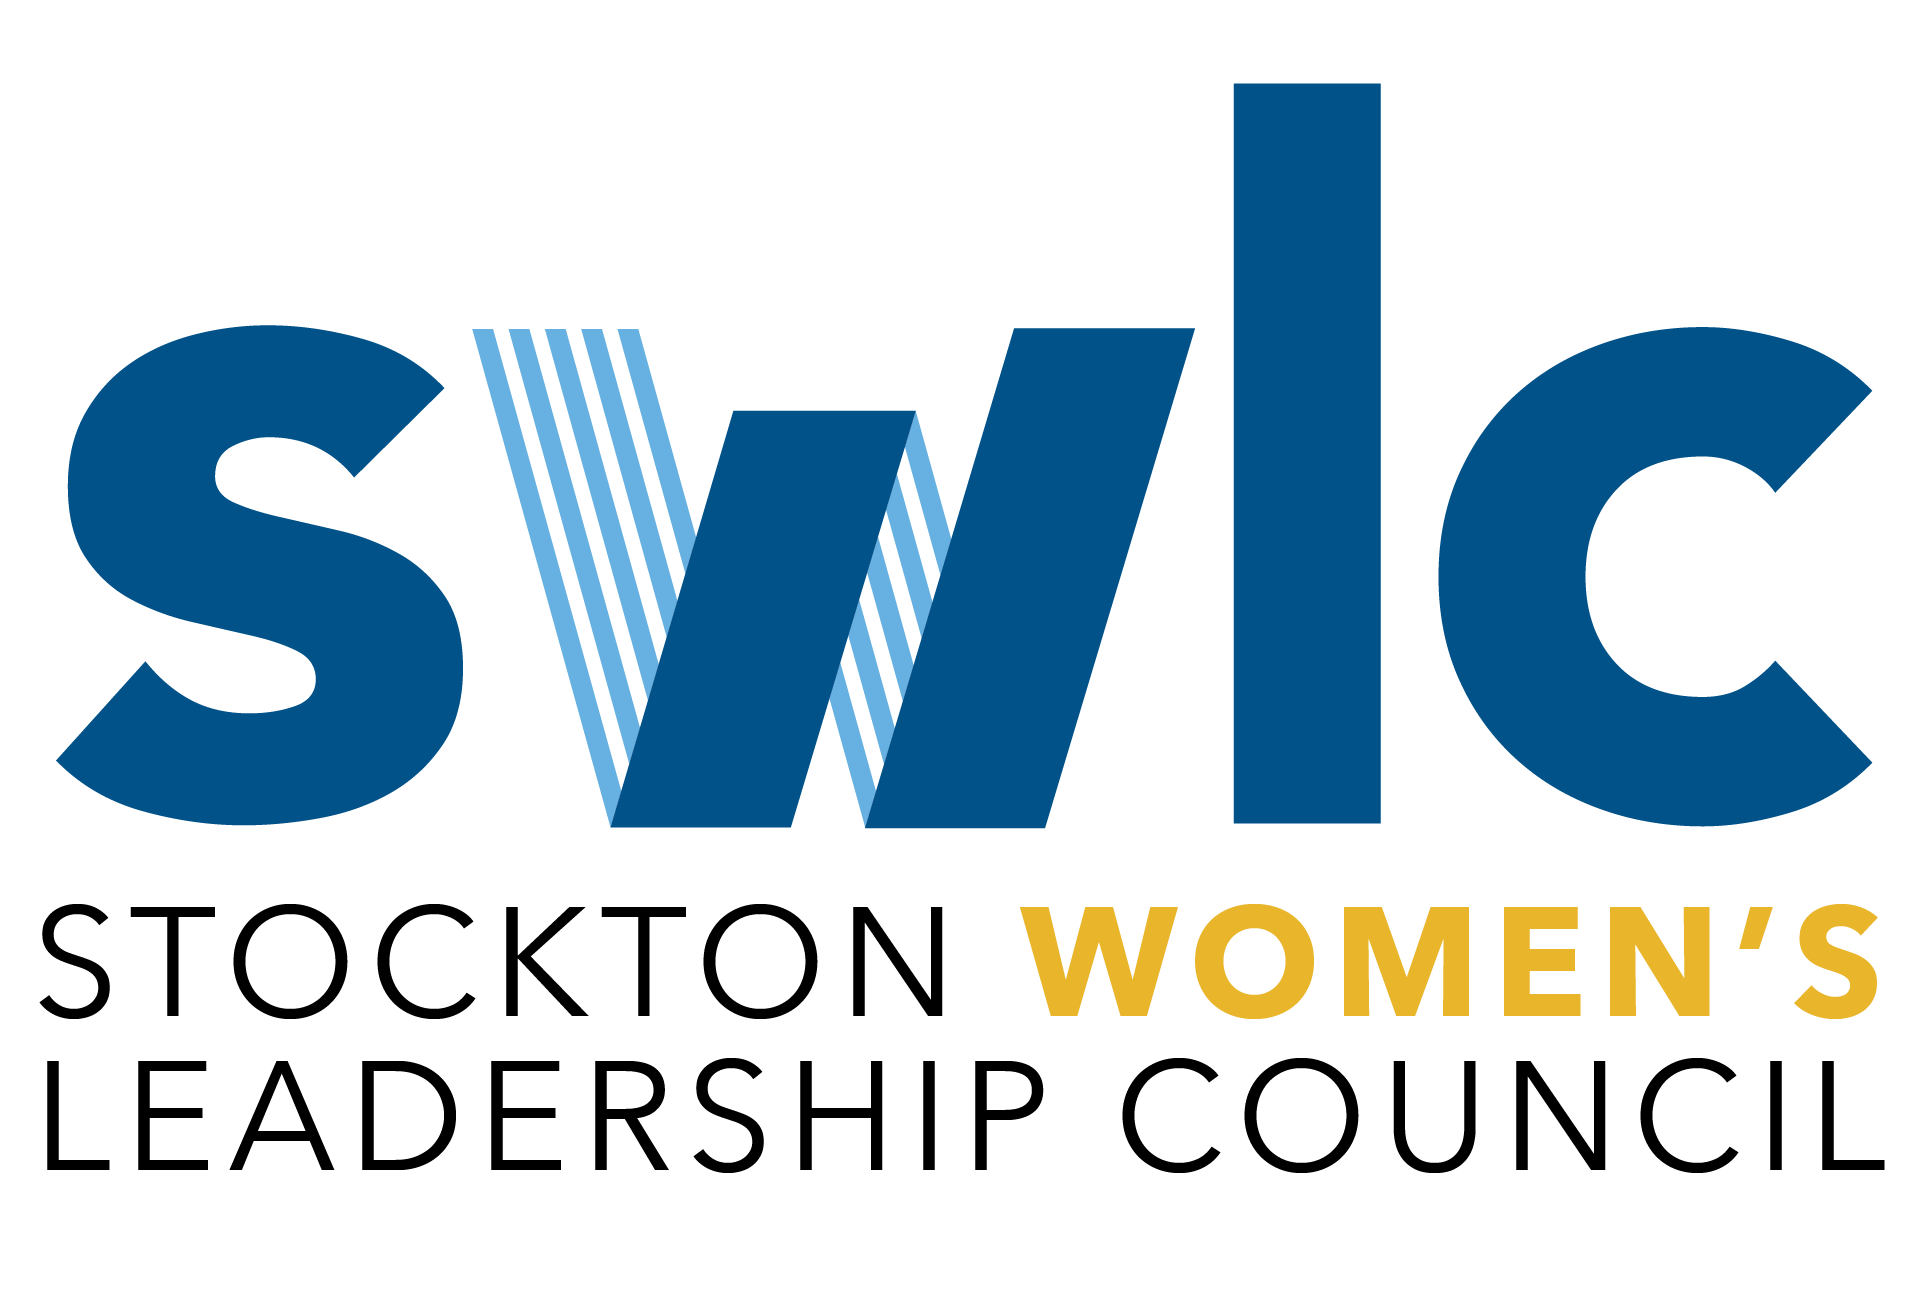 Stockton University Foundation’s new Women’s Leadership Counci logo